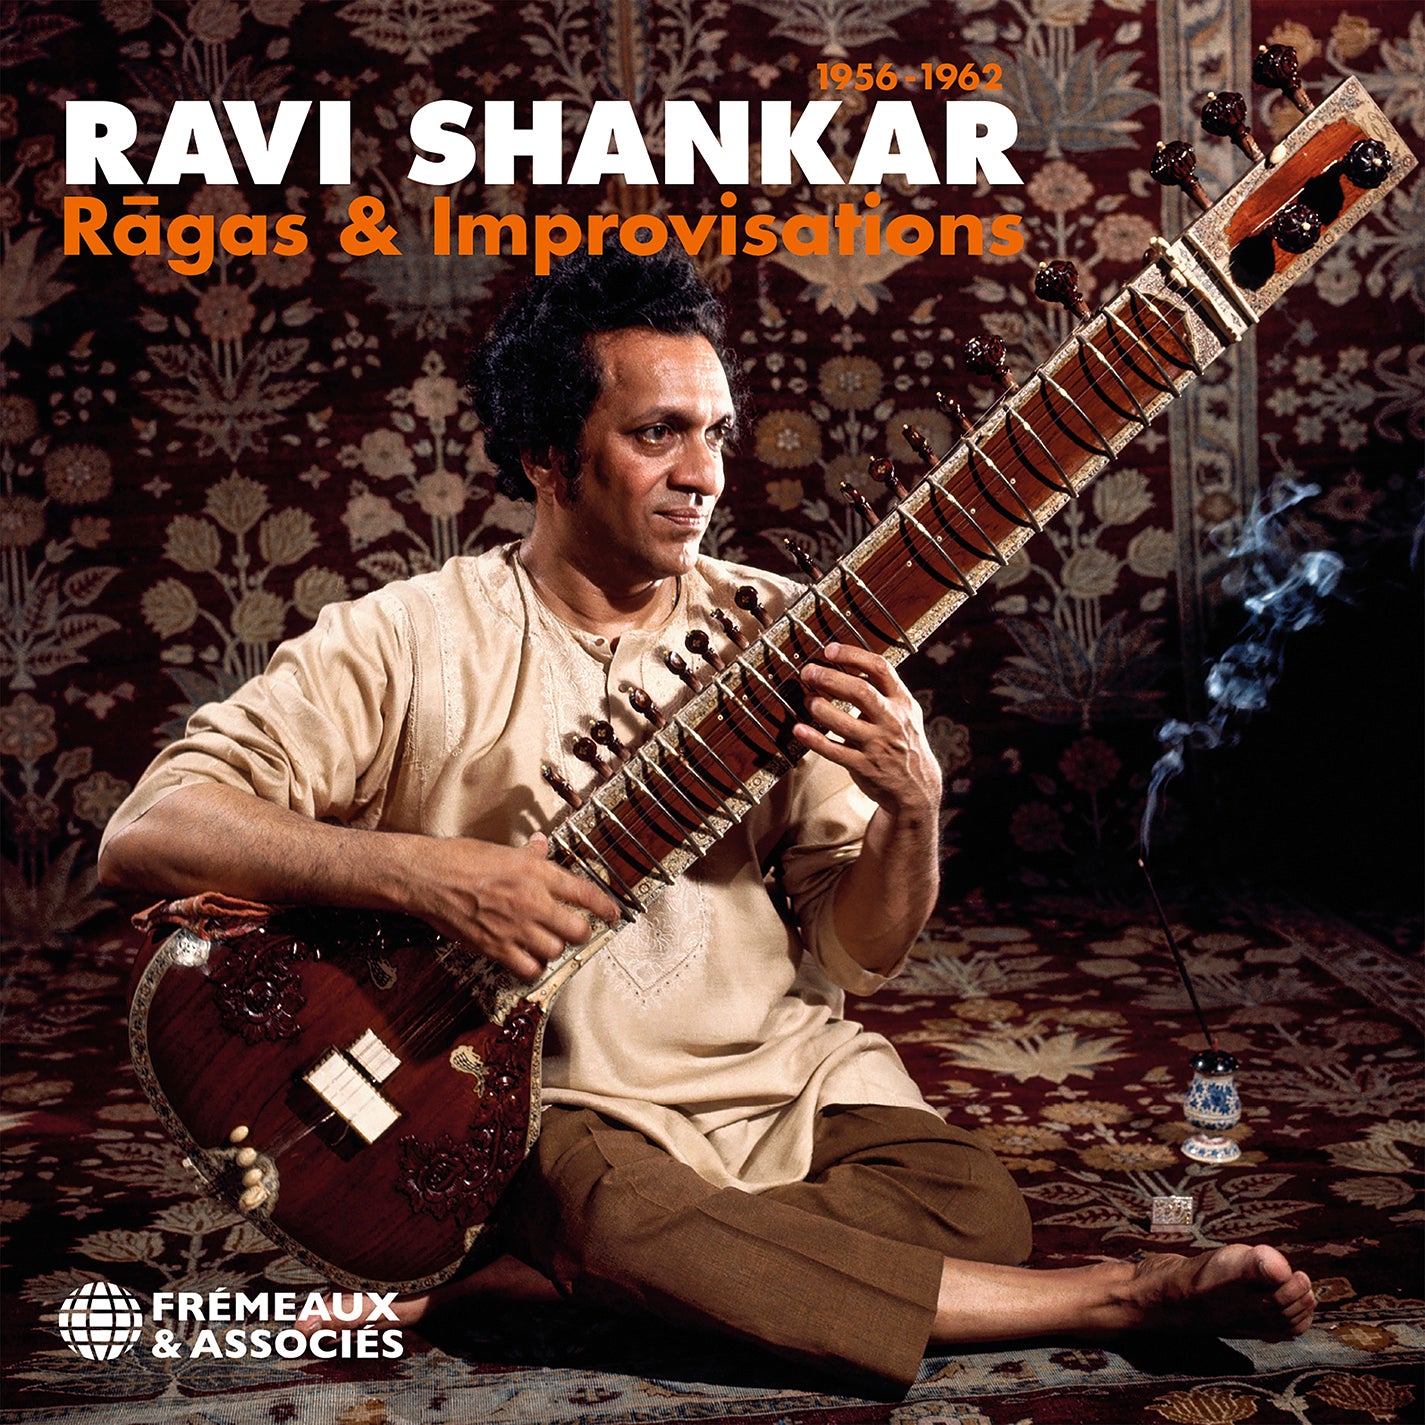 Ragas & improvisations, 1956-1962 / Ravi Shankar